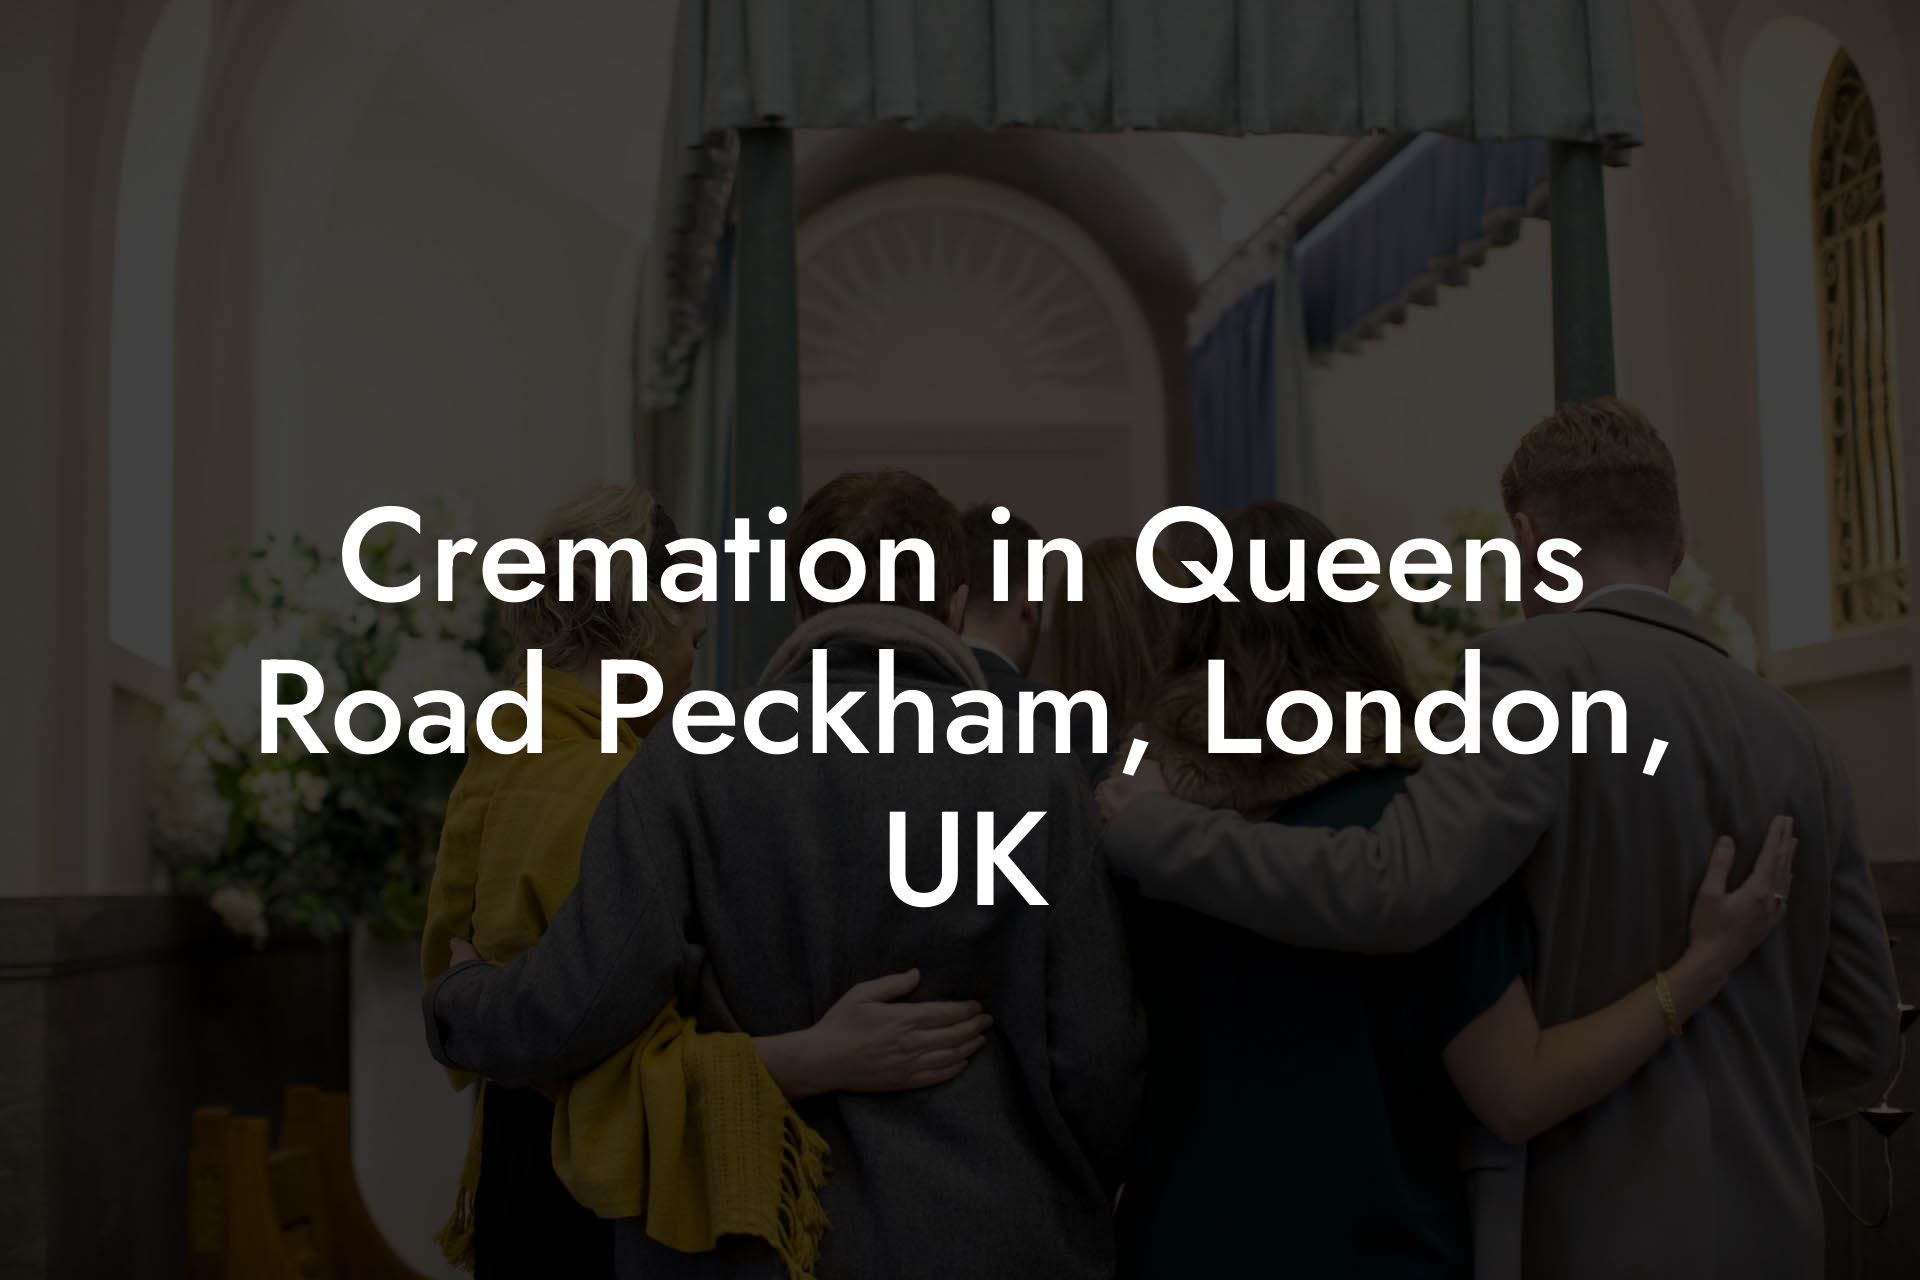 Cremation in Queens Road Peckham, London, UK